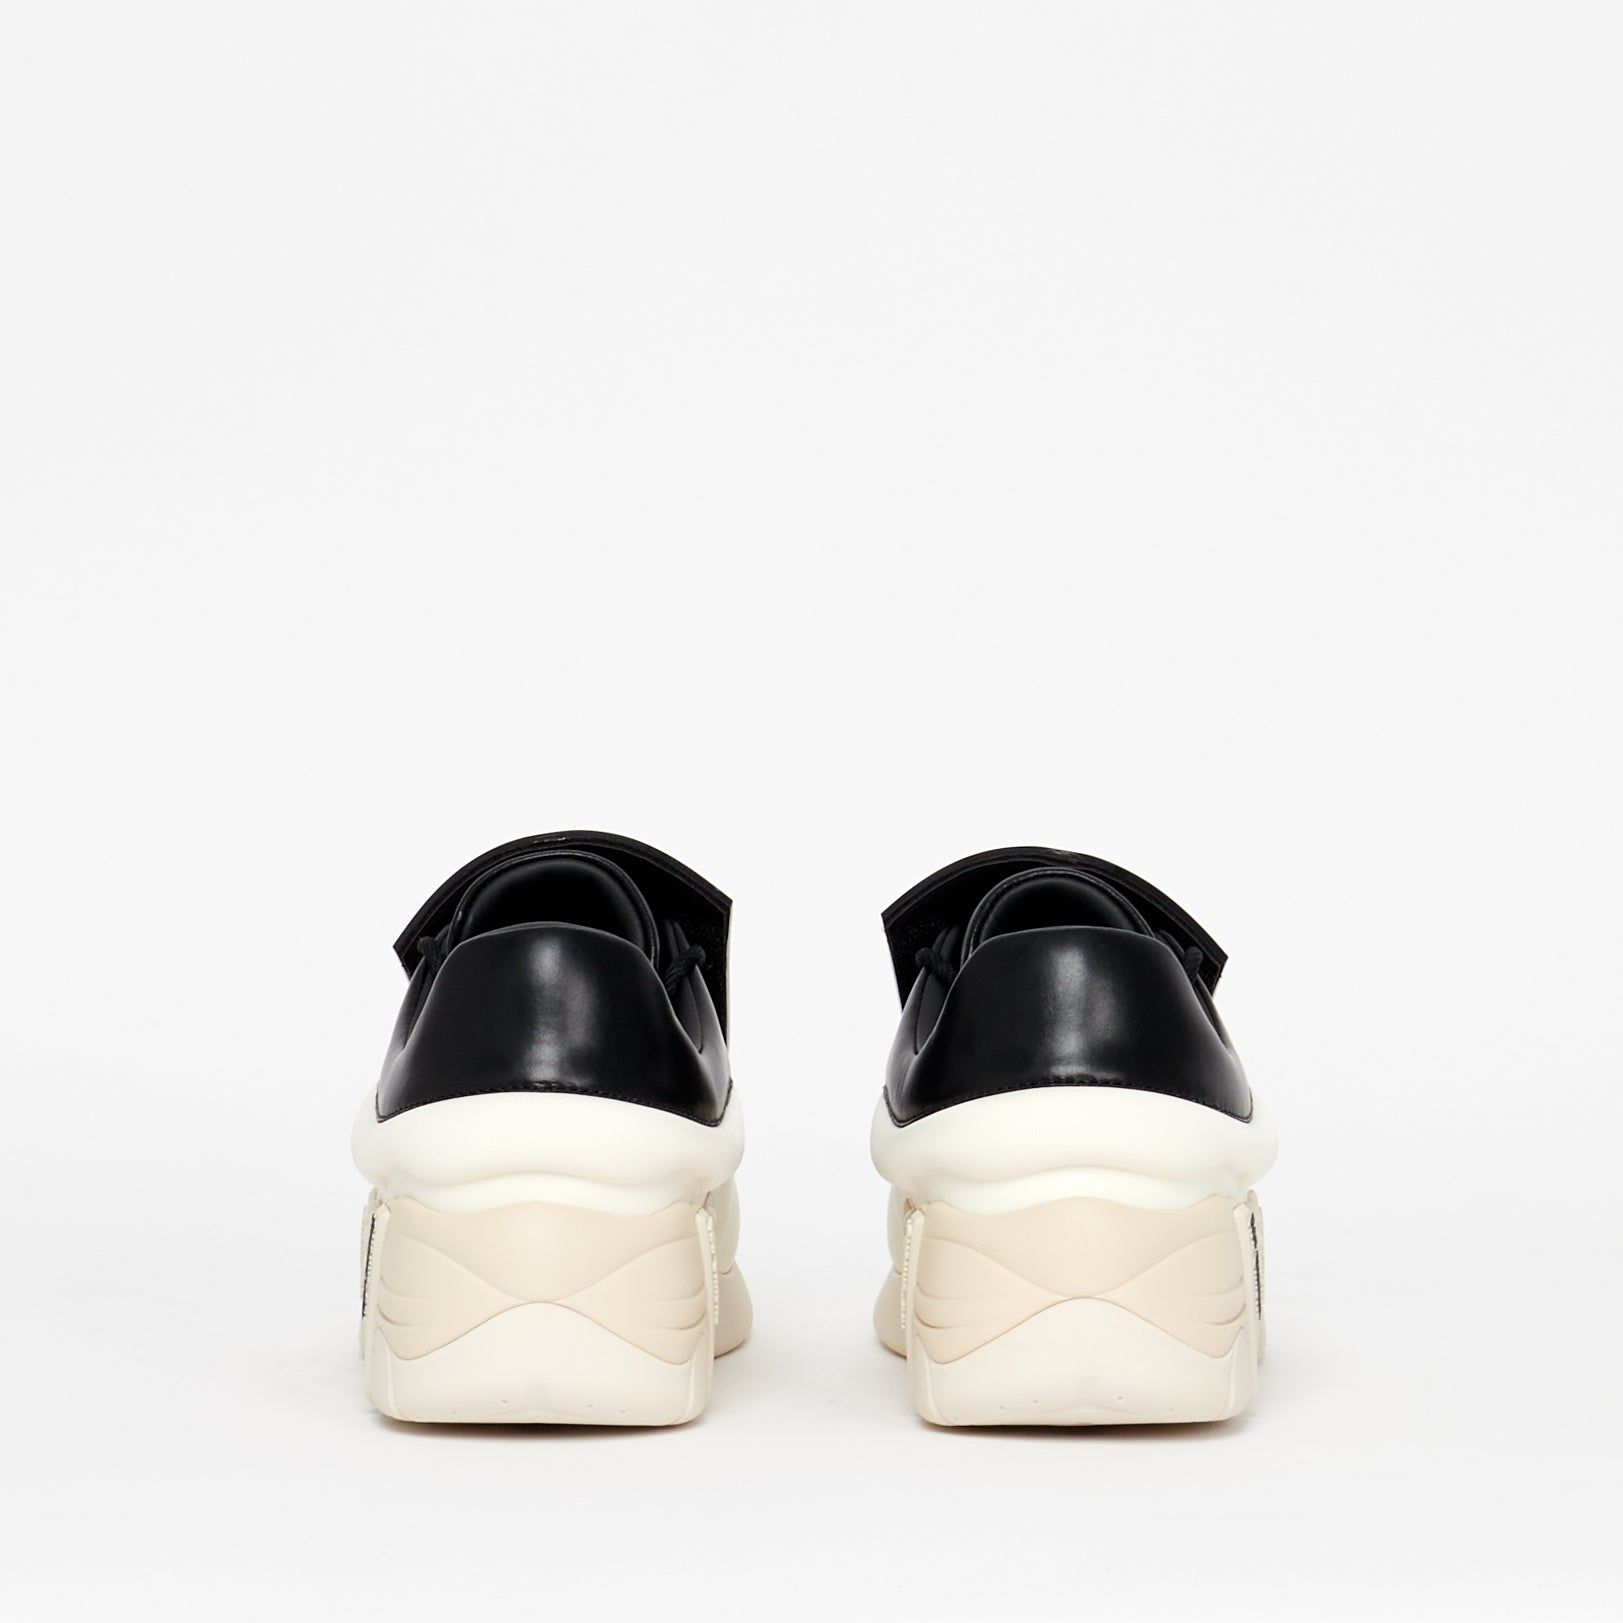 Sneaker Antei Black White Cream - Lesthete raf simons